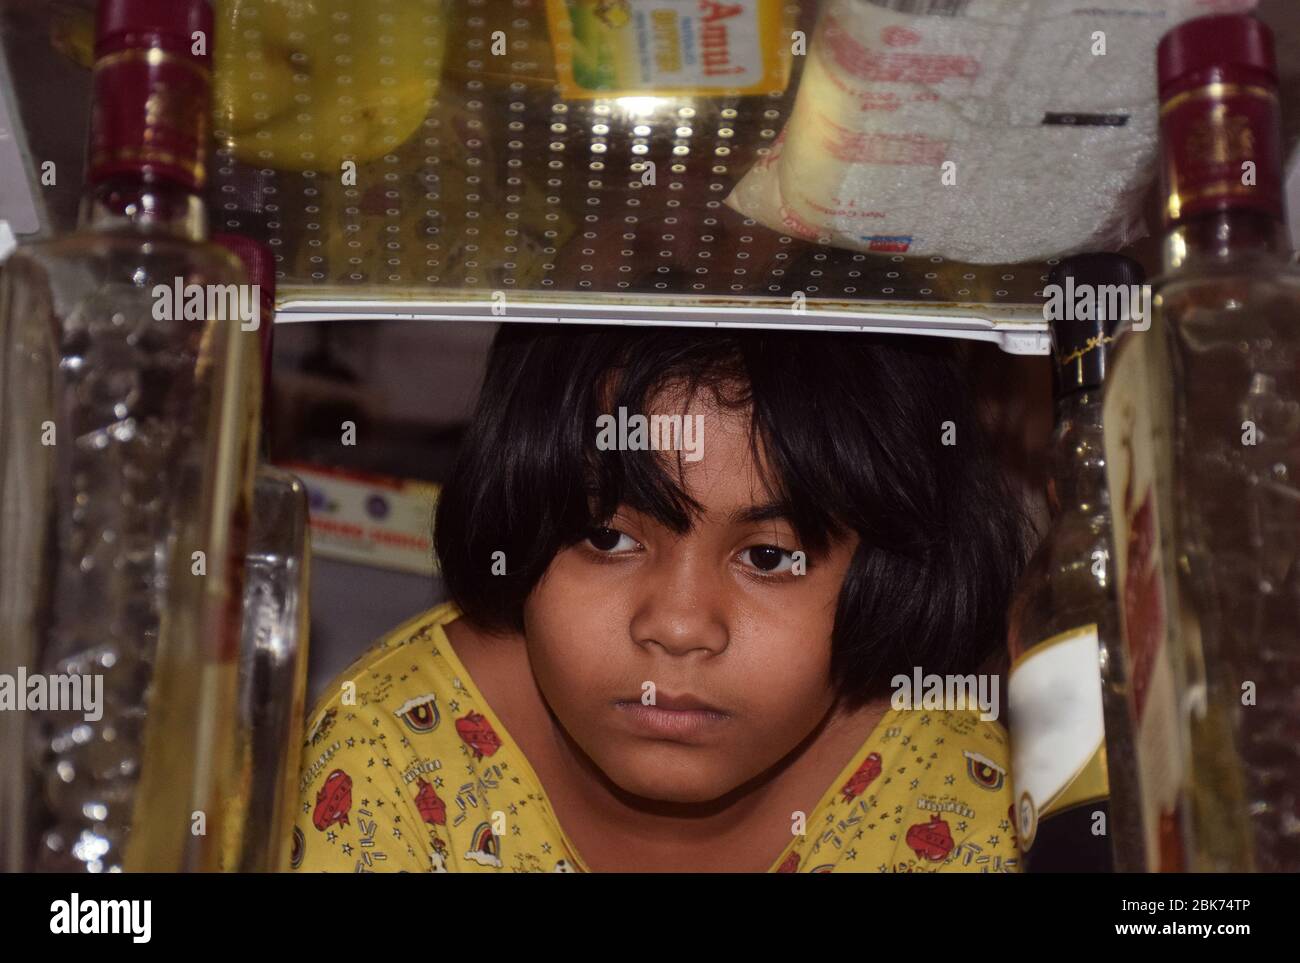 Indian girl searching something inside fridge or refrigerator Stock Photo